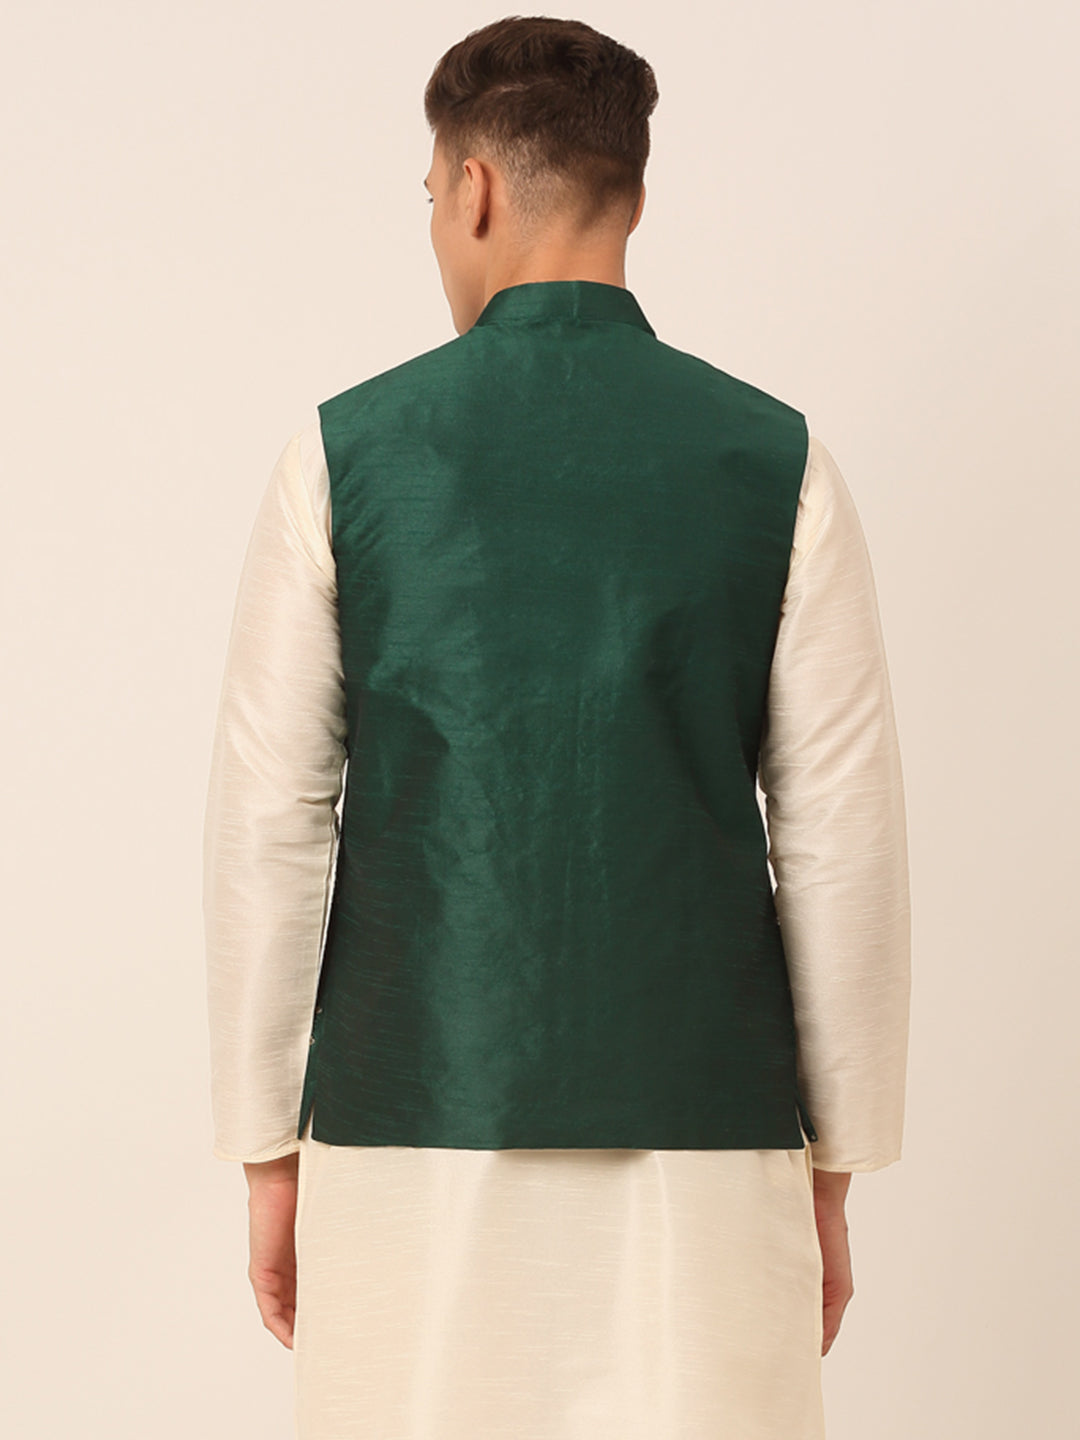 Men's Green Embroidered Woven Nehru Jackets ( Jowc 4044 Green ) - Virat Fashions